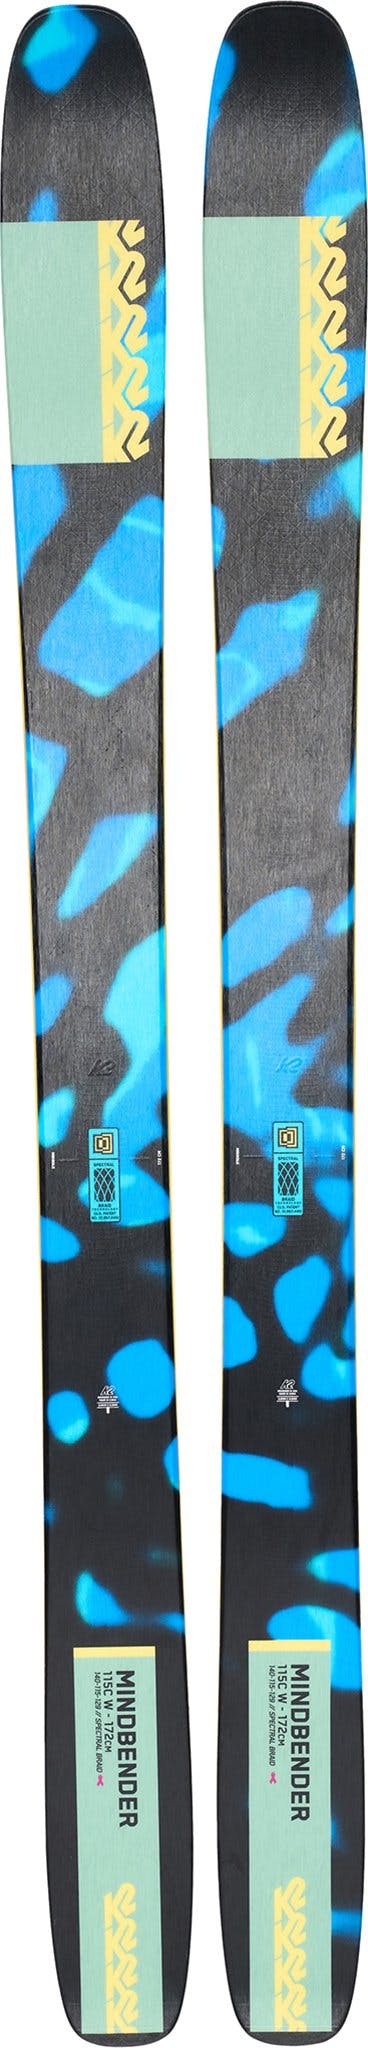 Product image for Mindbender 115C Skis - Women's